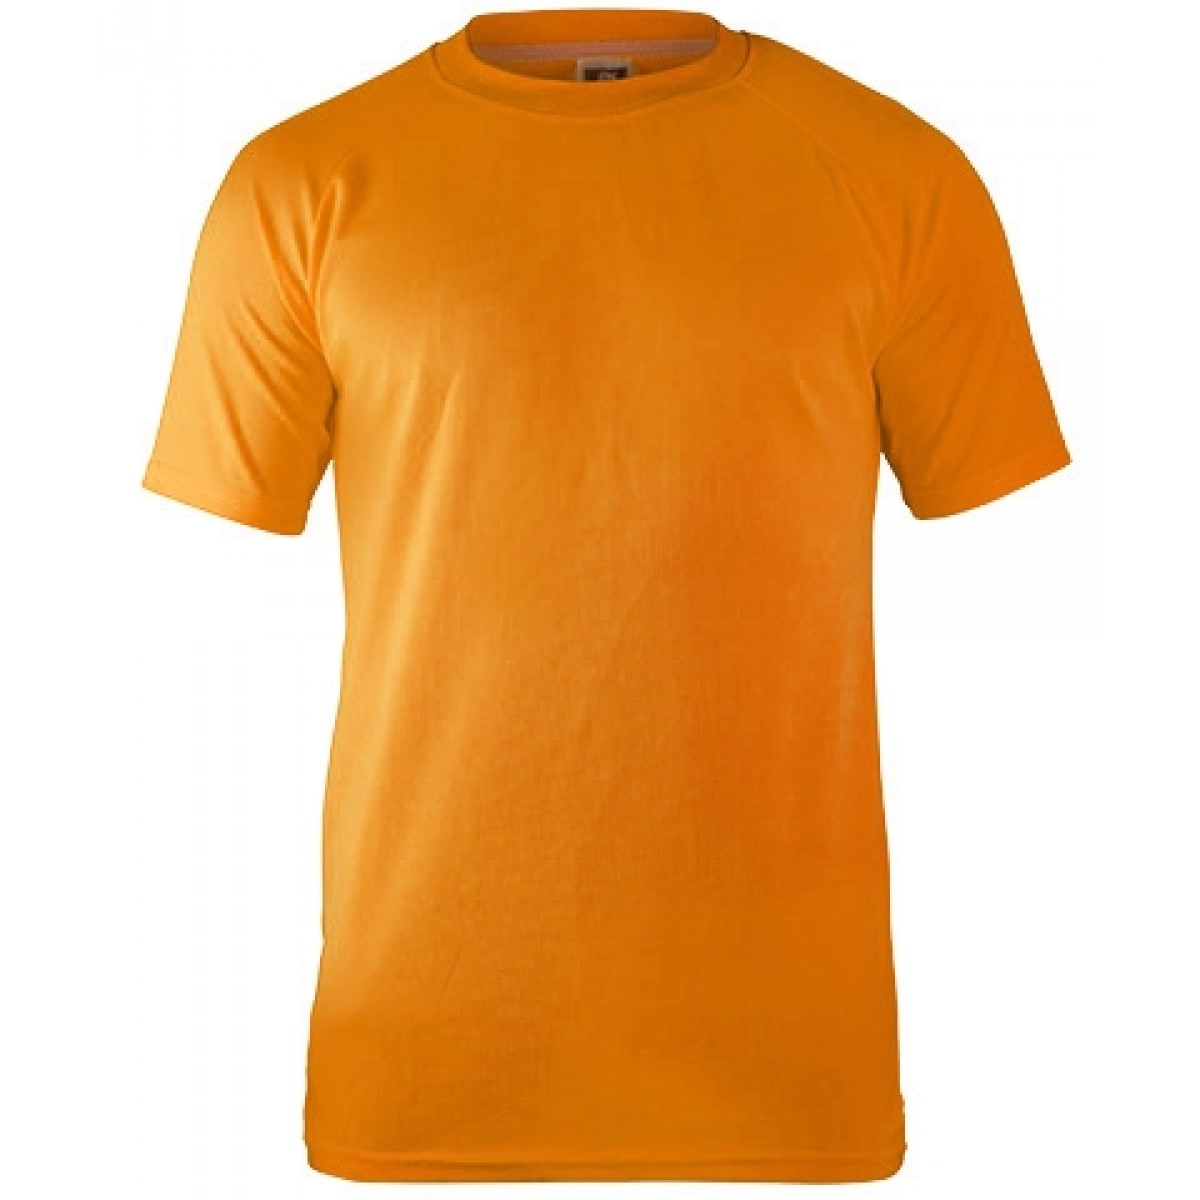 Short Sleeves Mesh Performance T-shirt-Neon Orange -YS